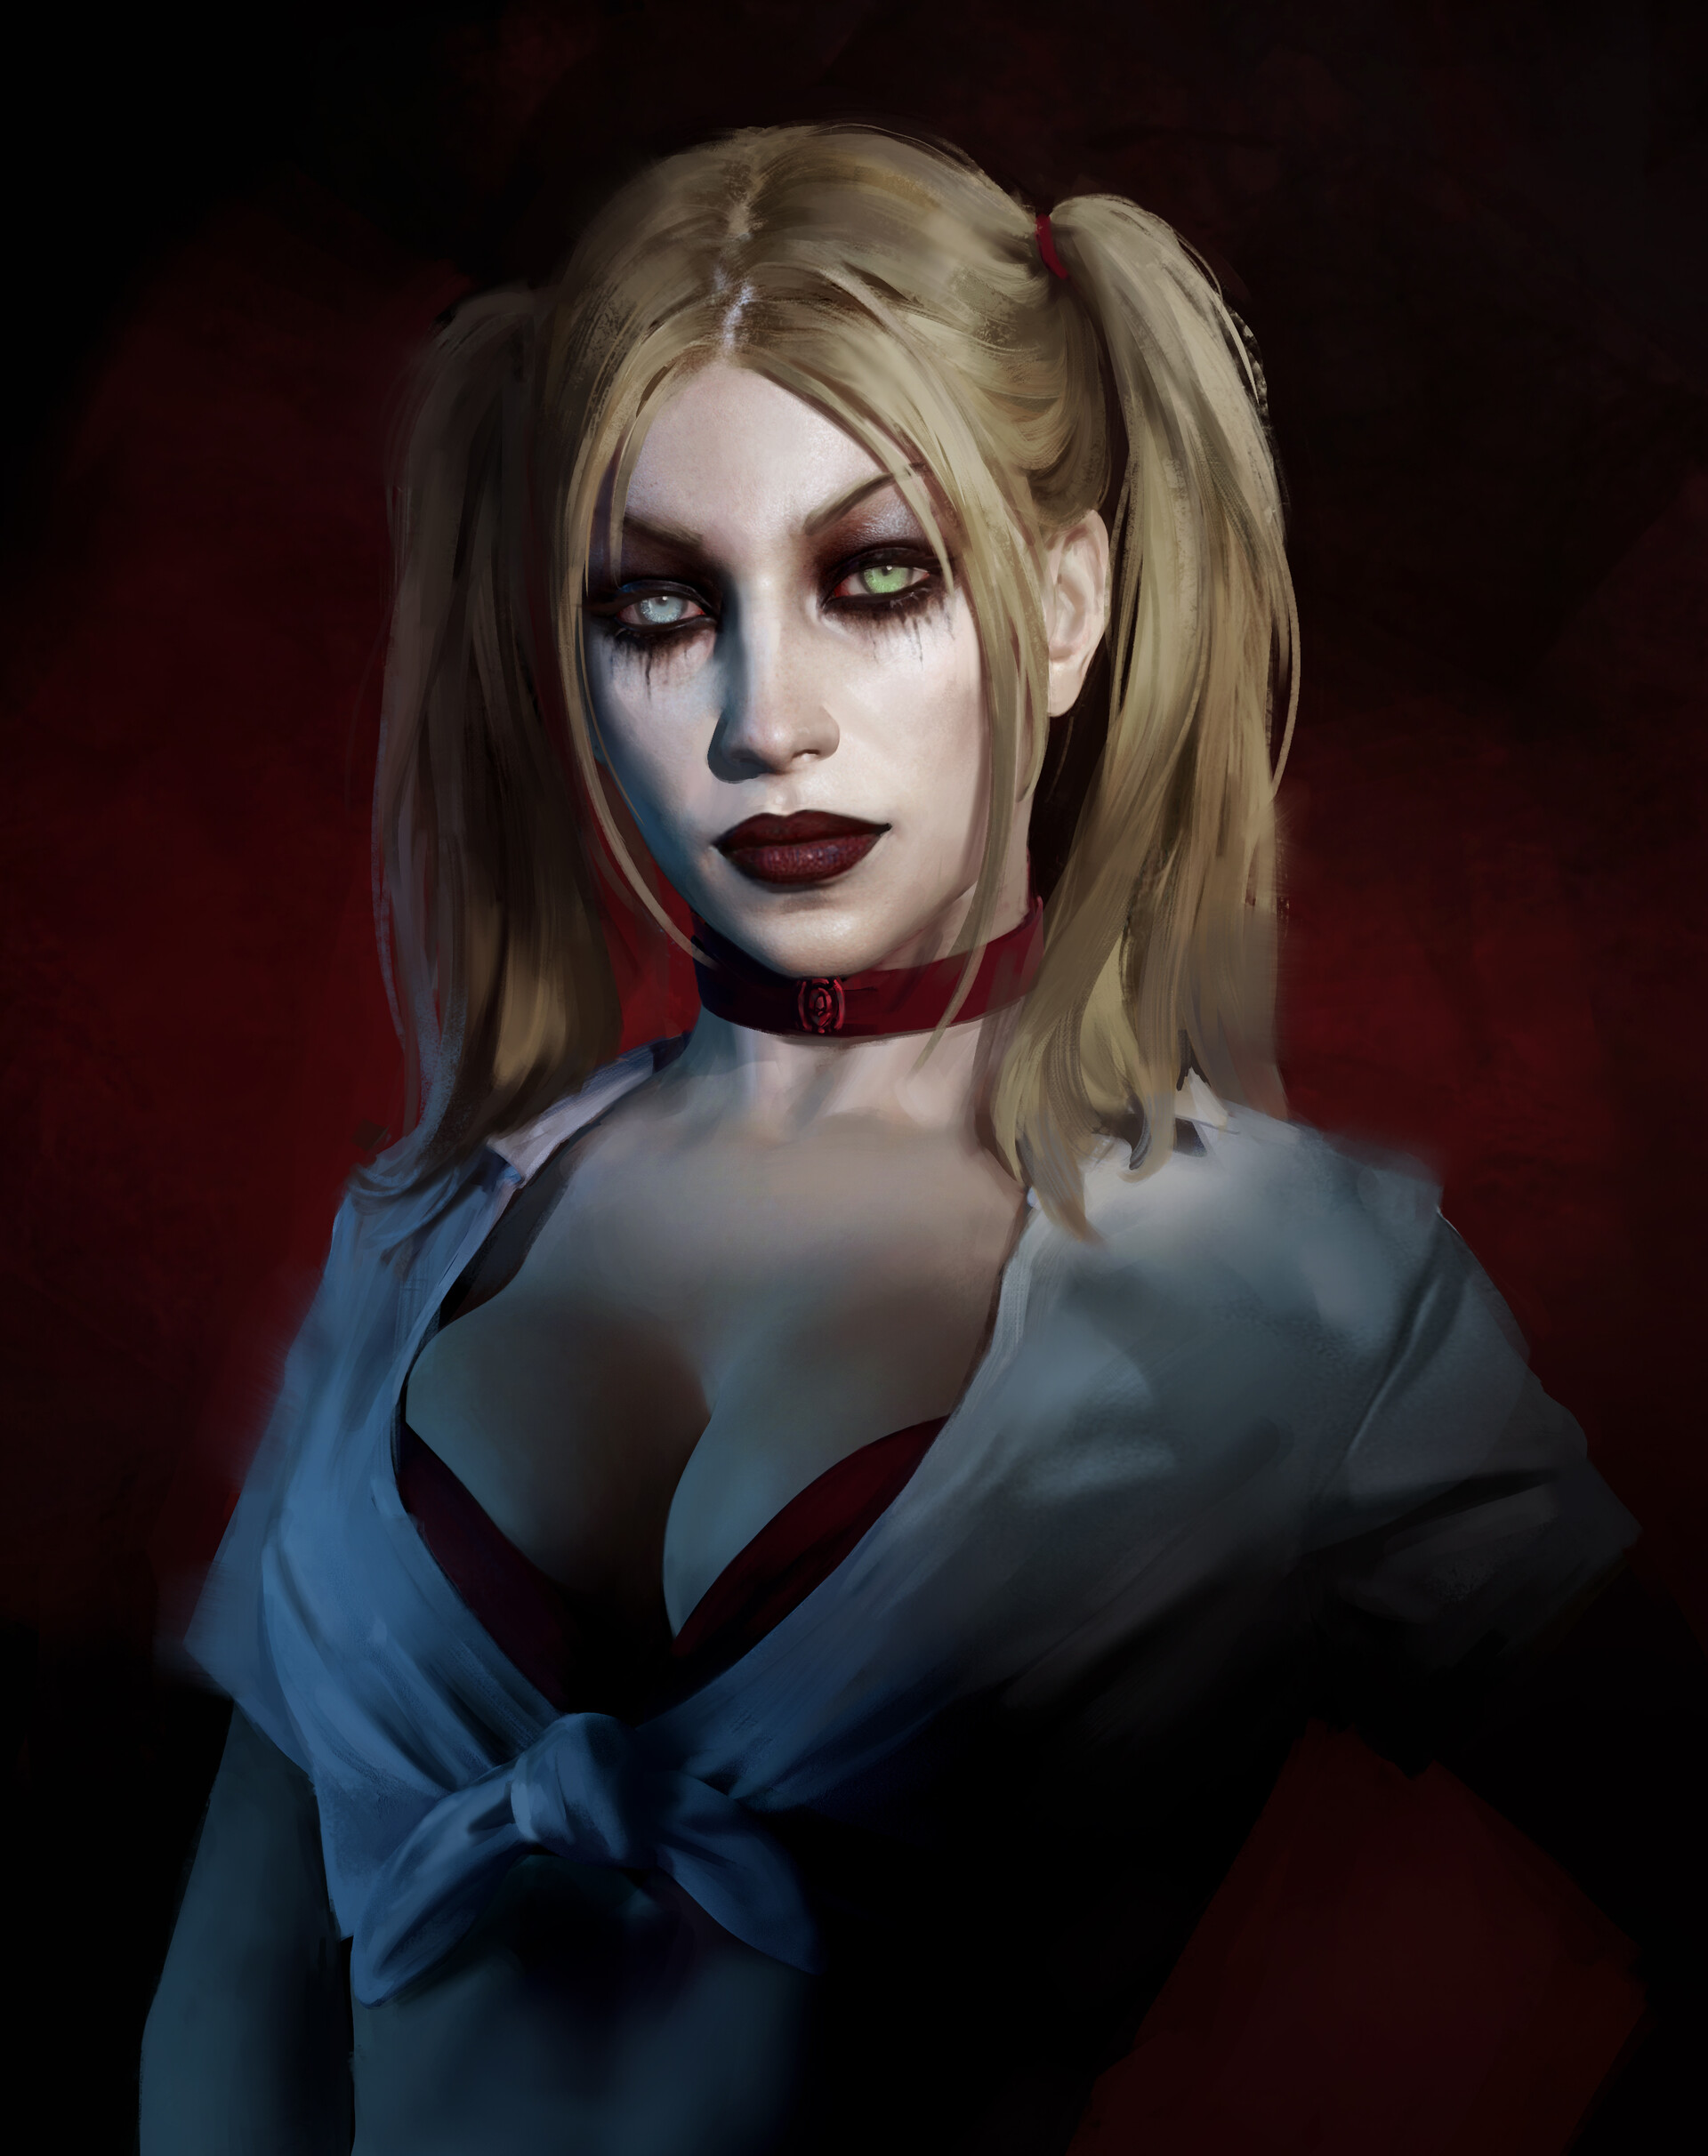 Encontro com Jeanette  Vampire The Masquerade Bloodlines